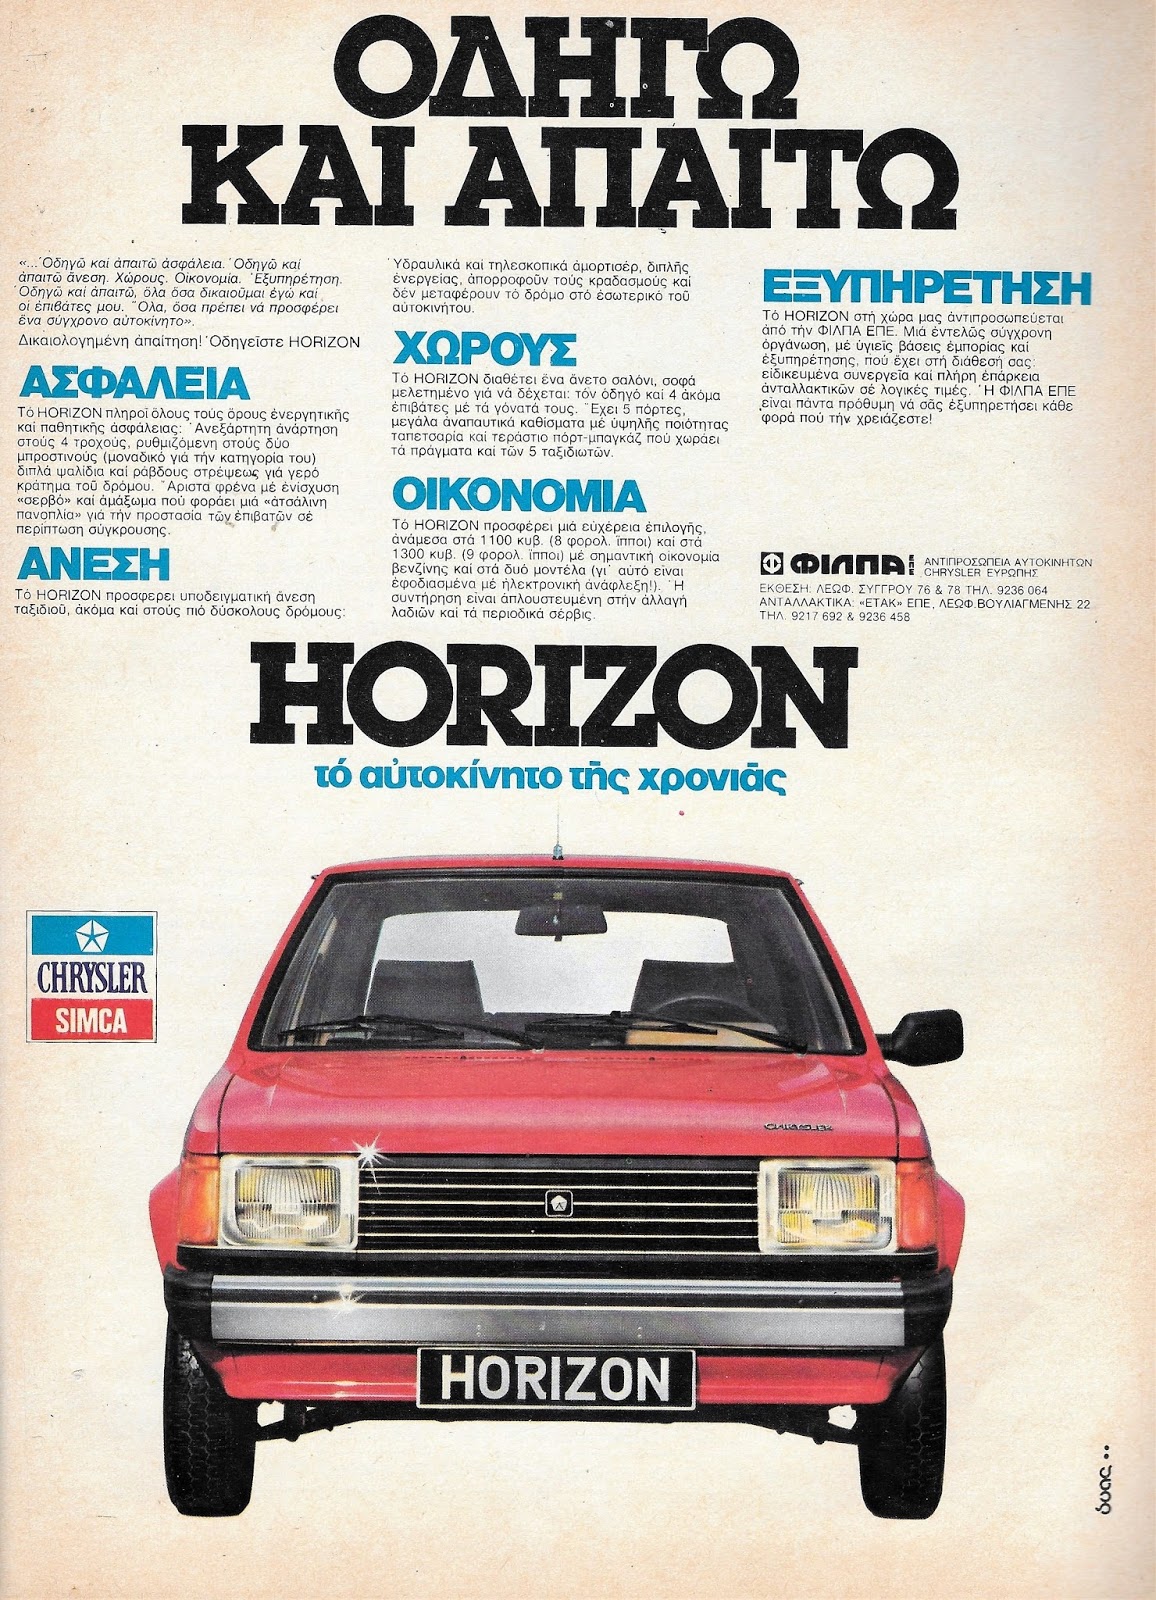 Hellenic Motor History Simca